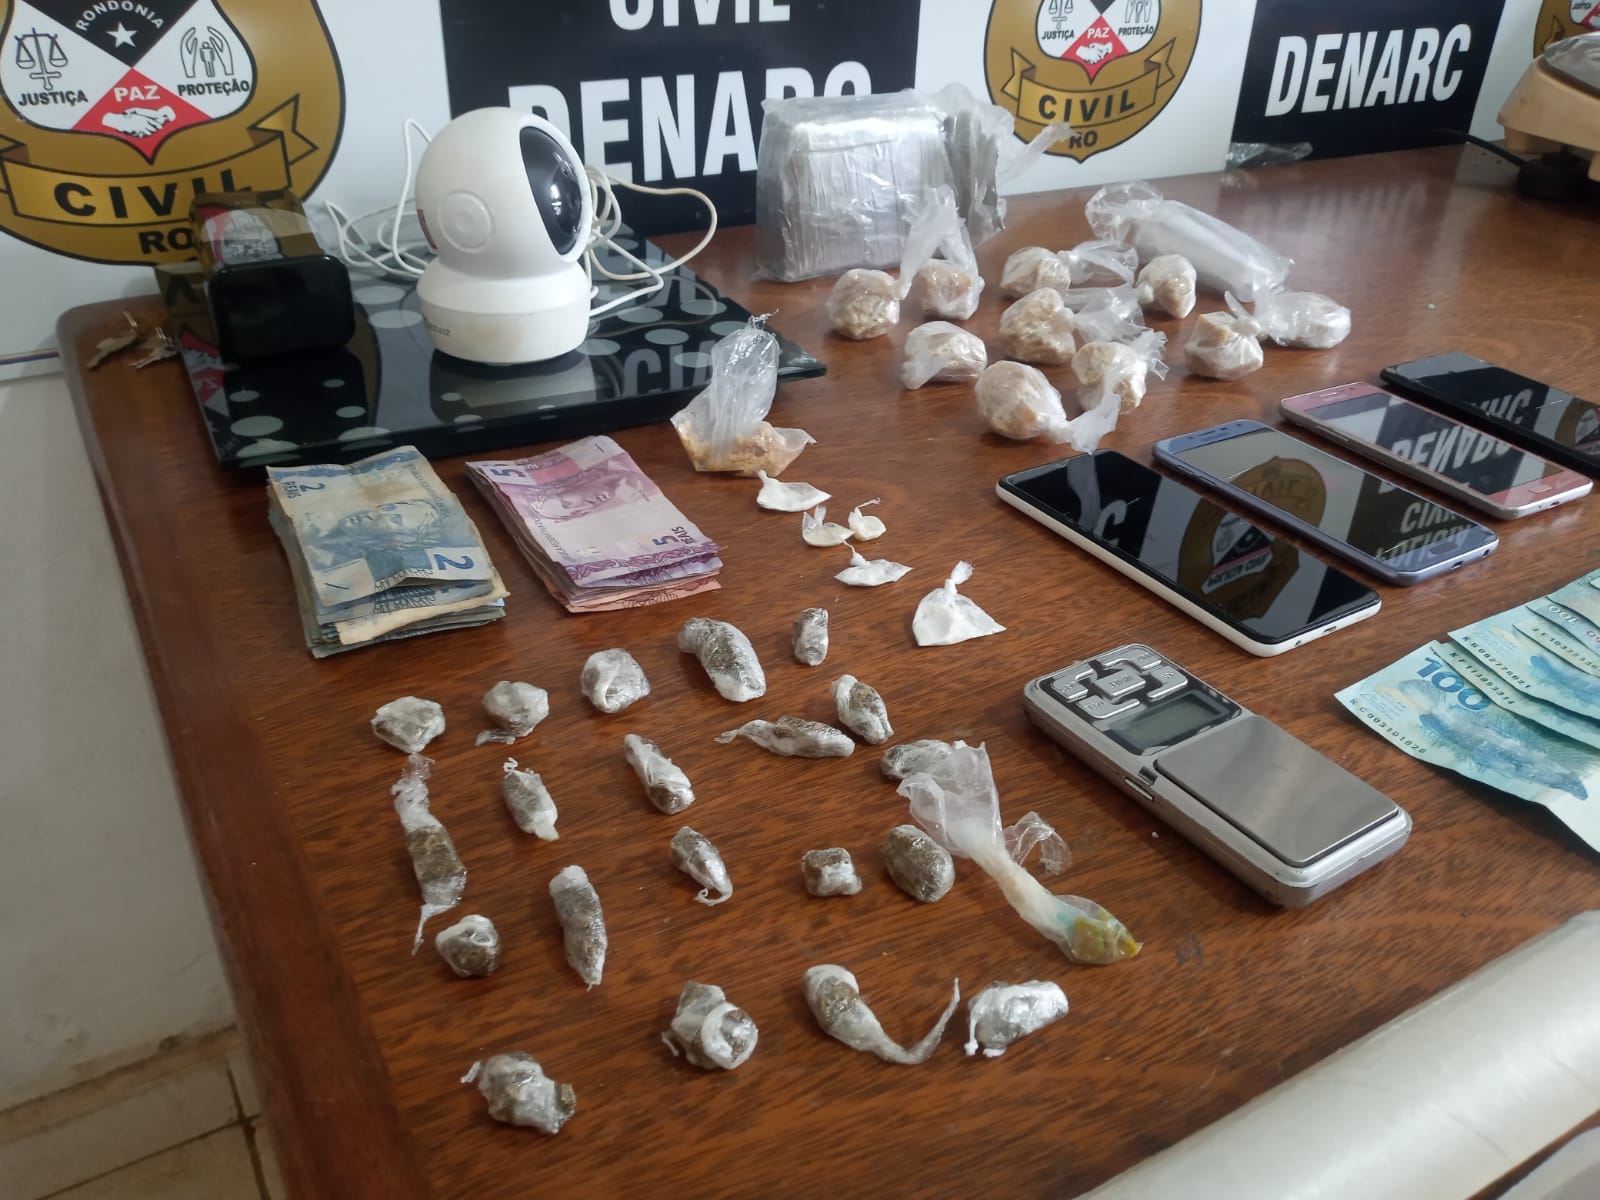 Denarc prende traficante usando frutaria de fachada para vender drogas na capital - News Rondônia